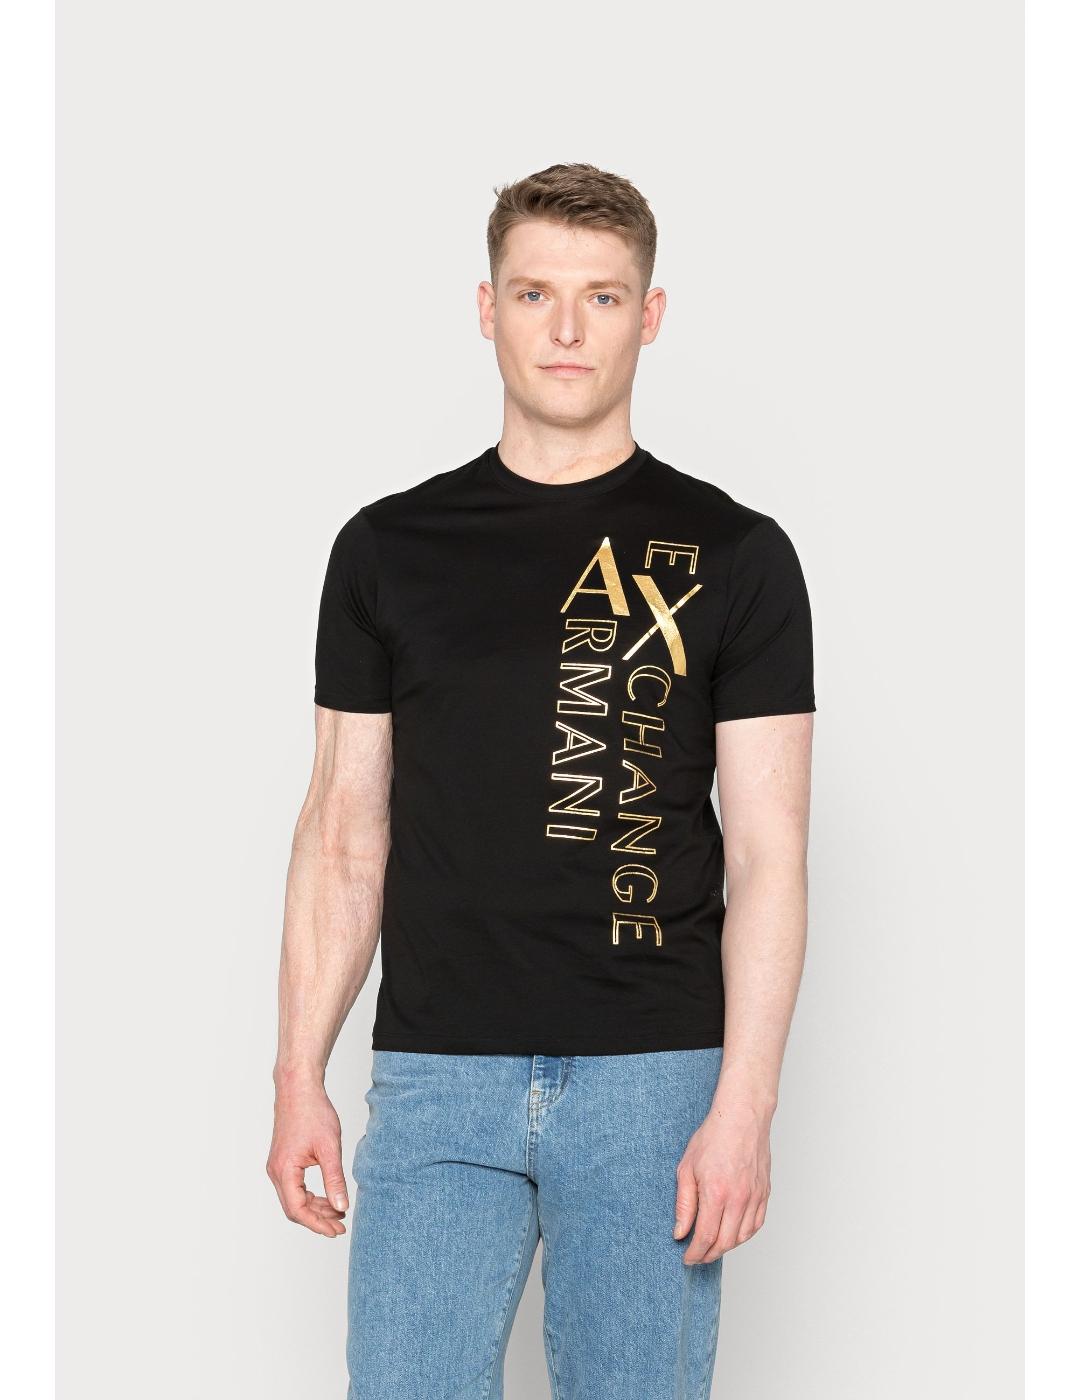 Puro Imperativo Perth Camiseta Armani Exchange logo dorado para hombre